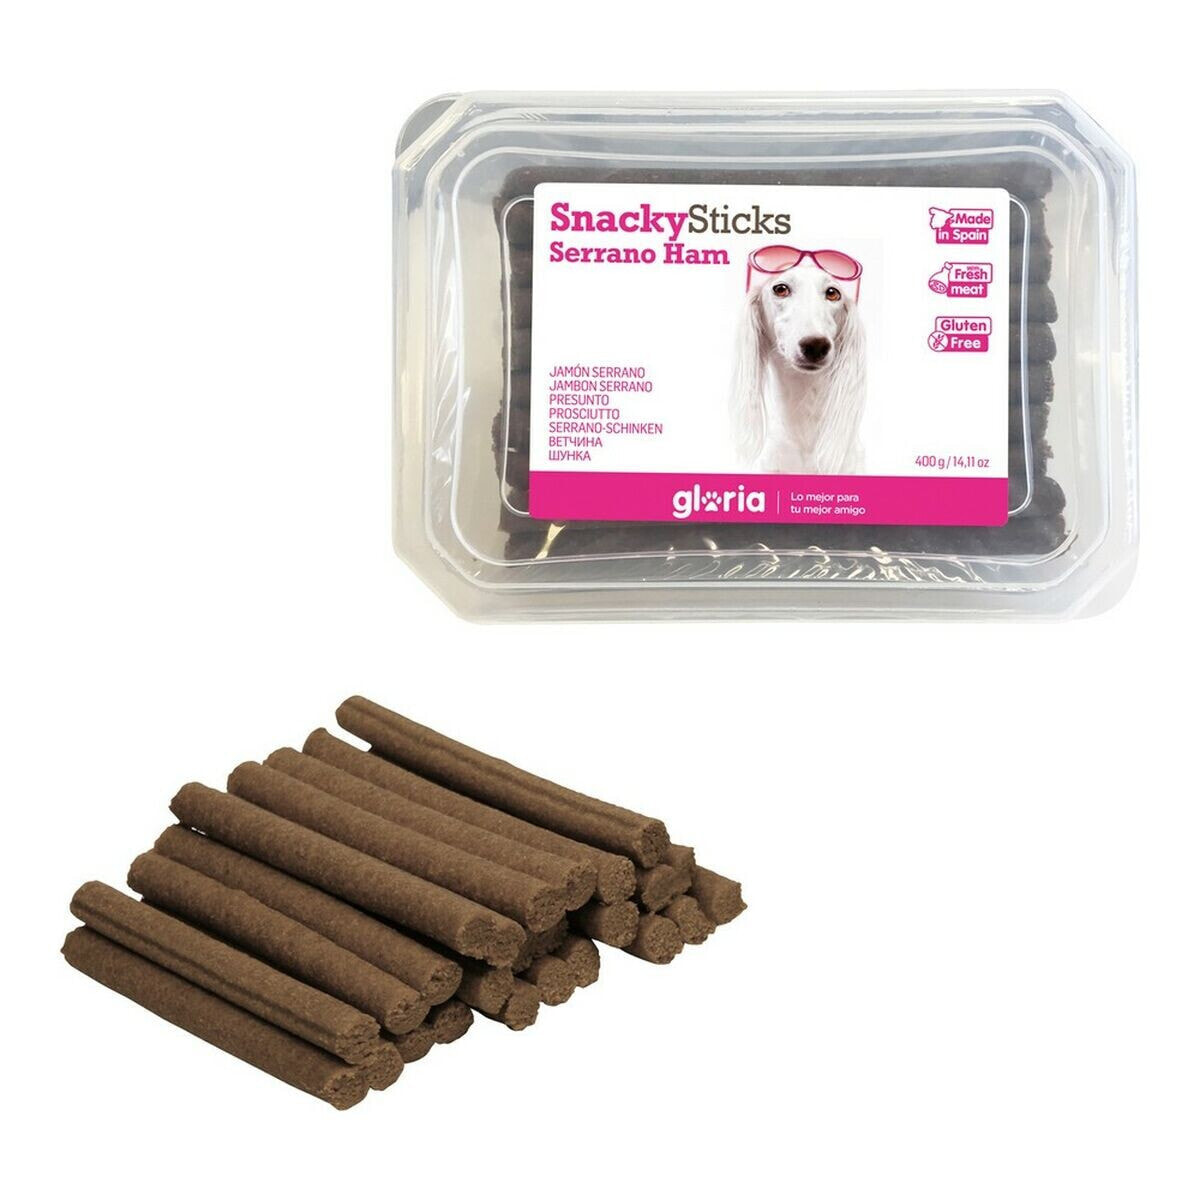 Закуска для собак Gloria Snackys Sticks ветчина Батончики (800 g)